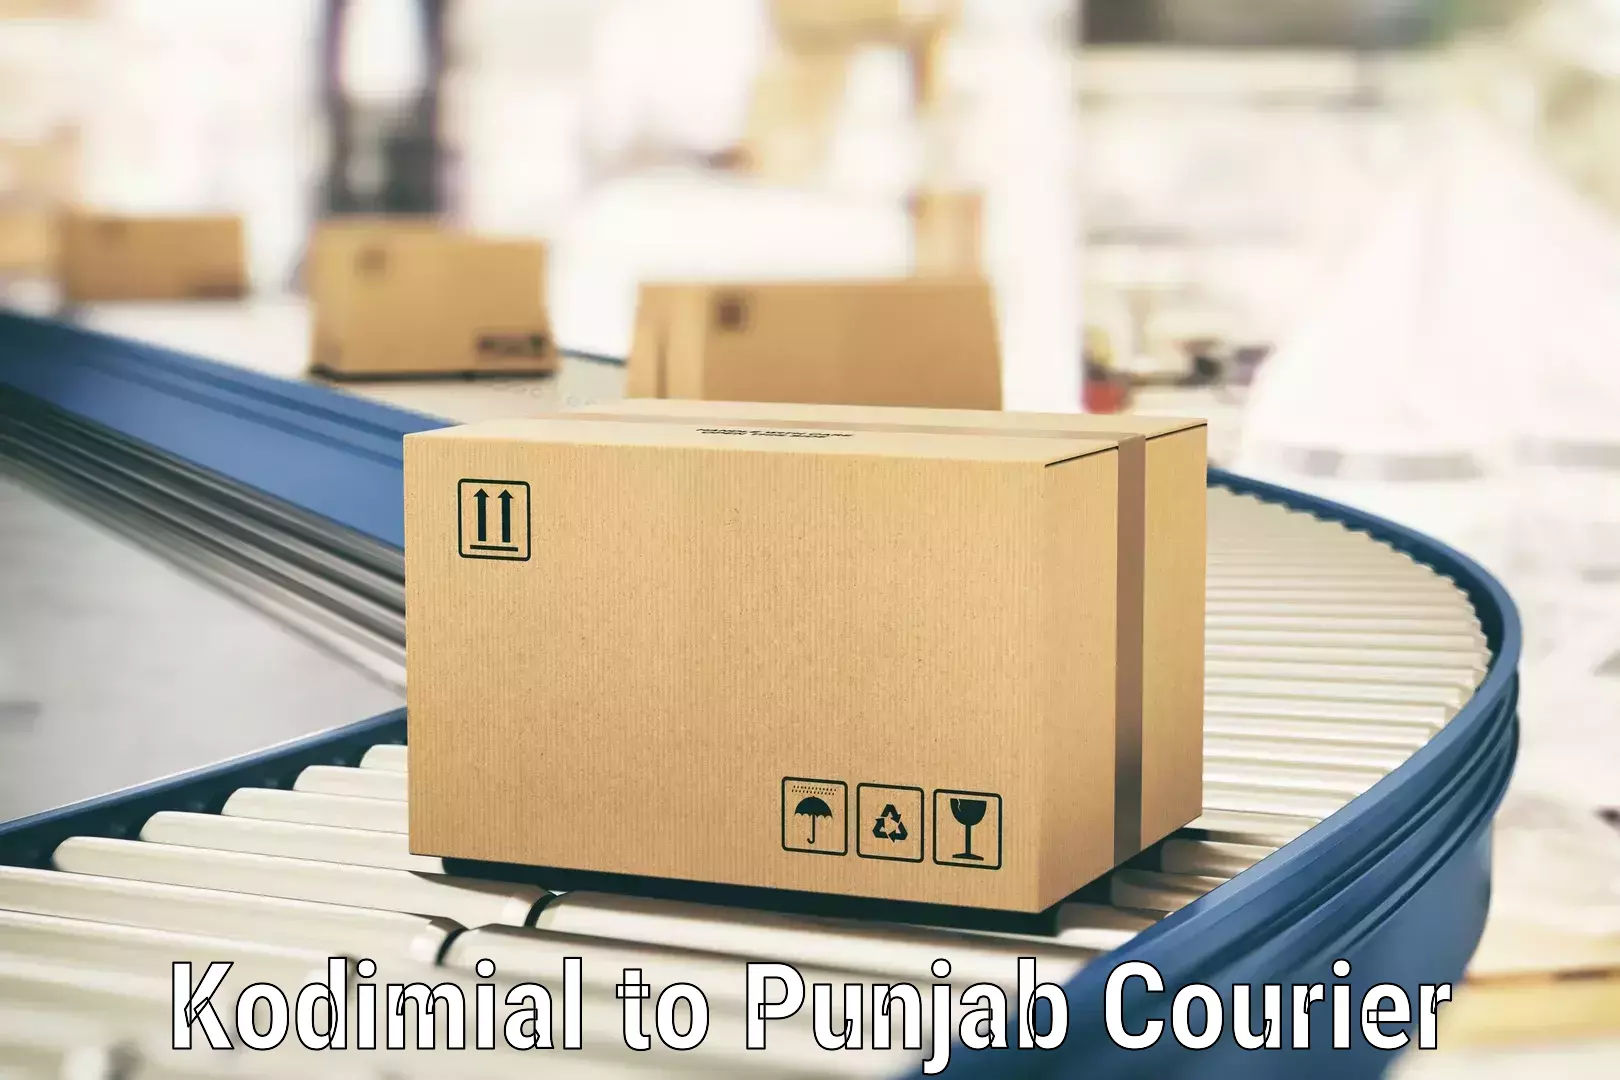 Online package tracking Kodimial to Punjab